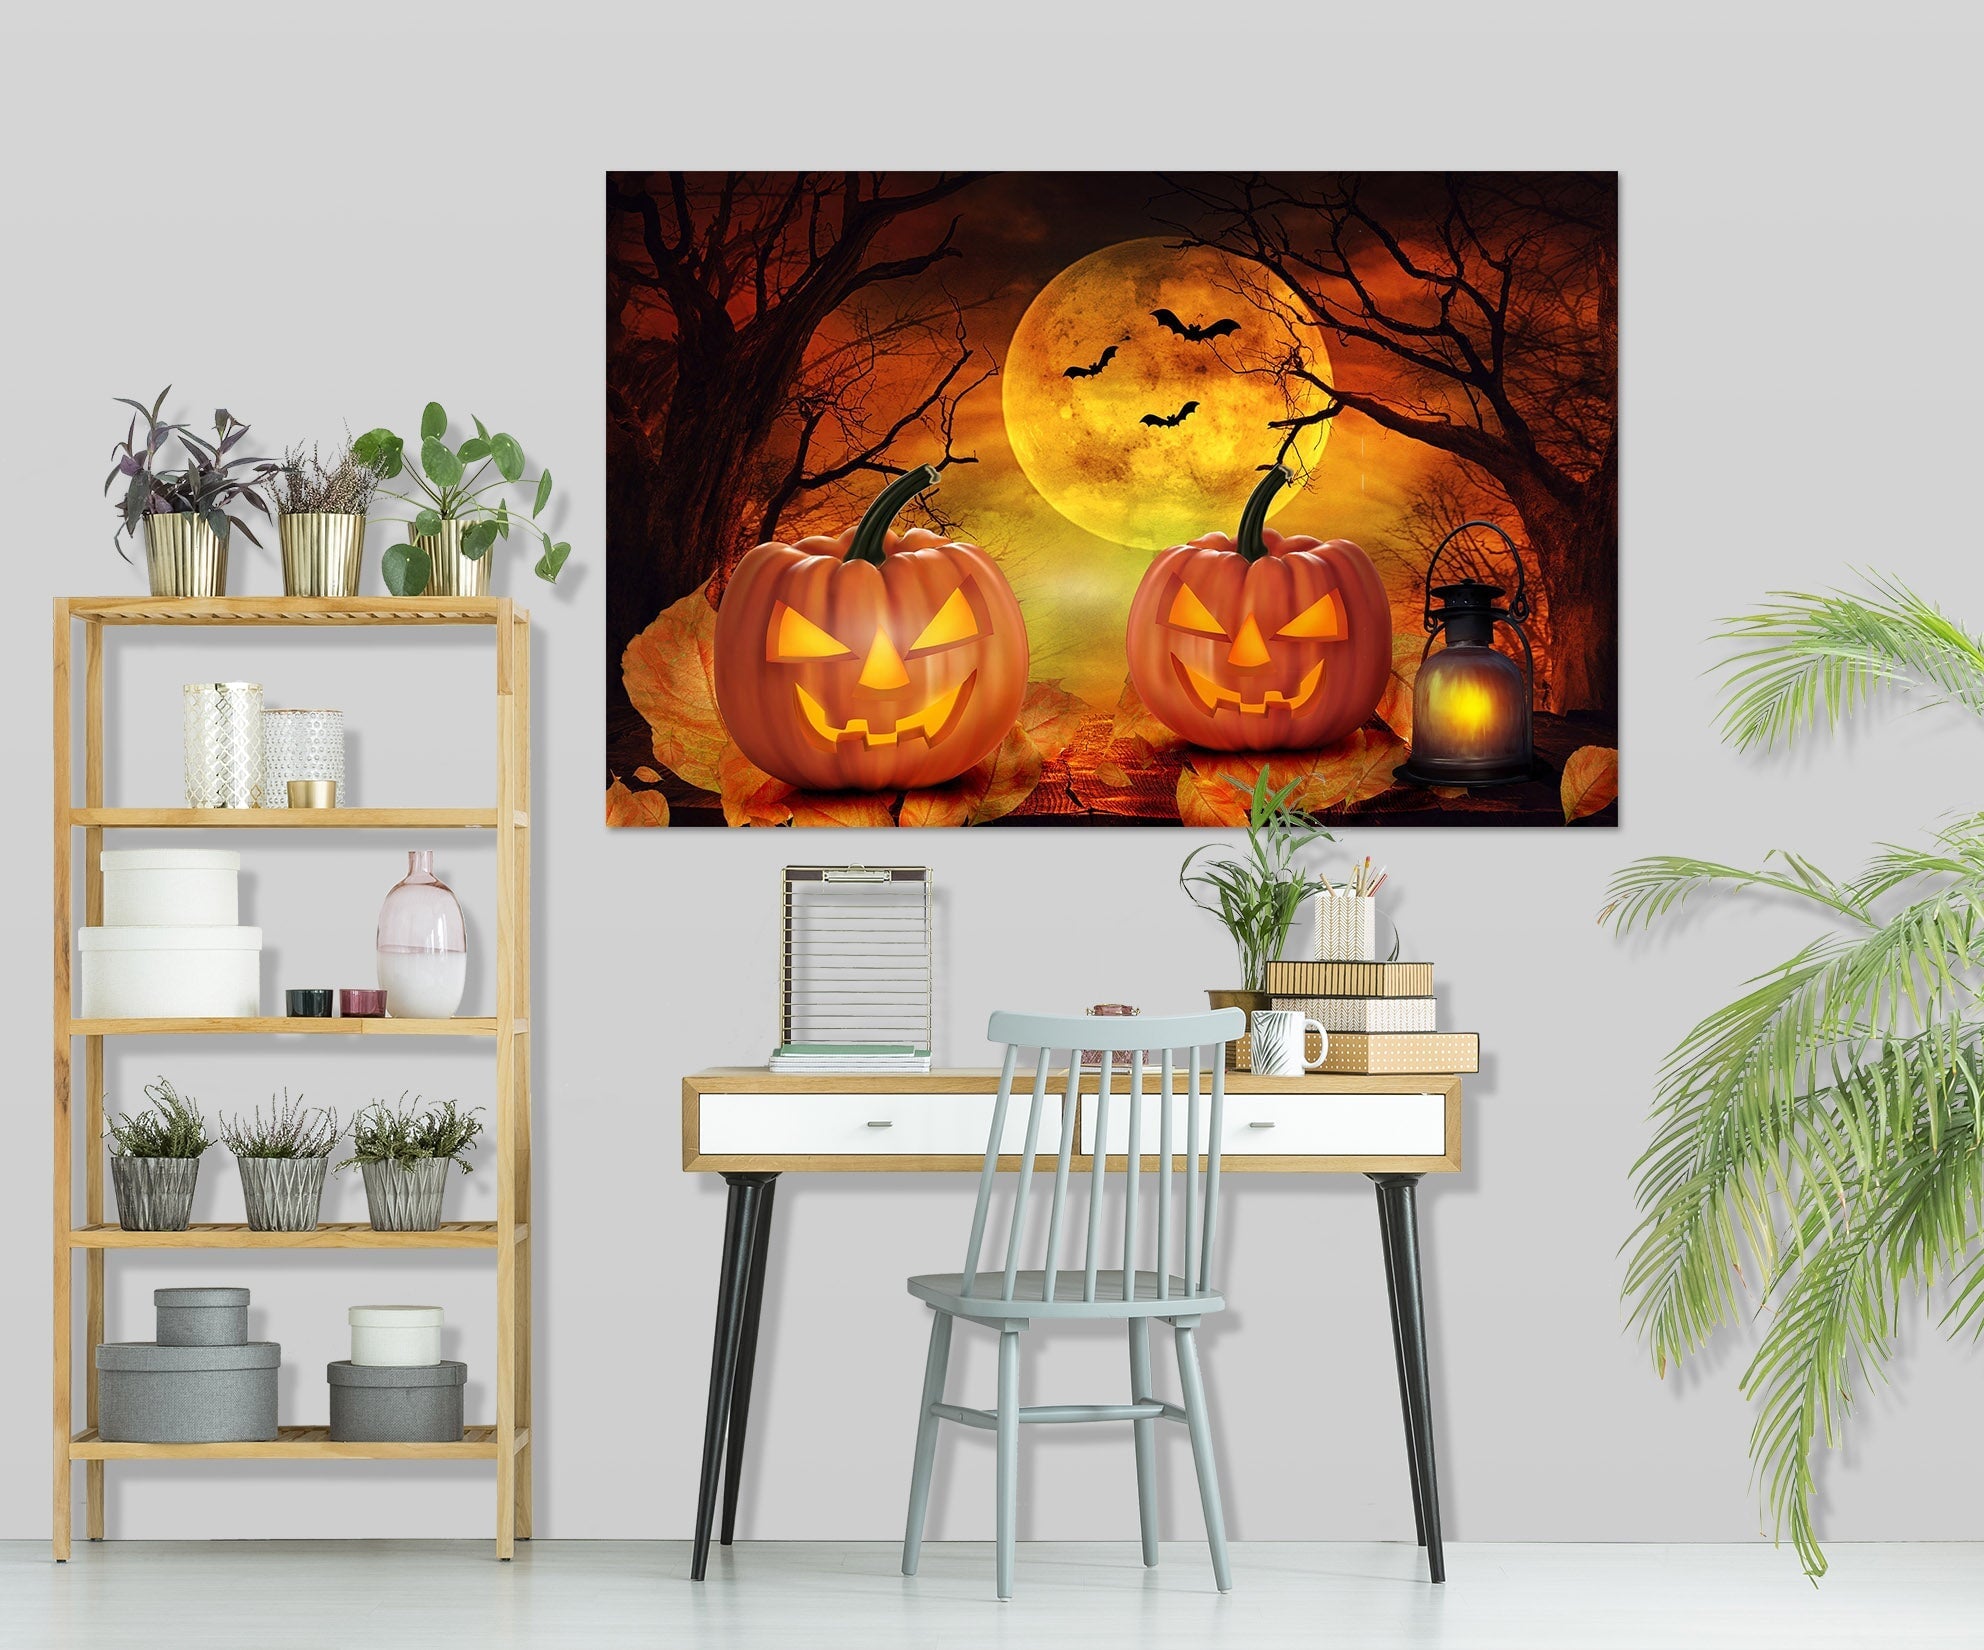 3D Moon Pumpkin Oil Lamp 009 Halloween Wall Stickers Wallpaper AJ Wallpaper 2 